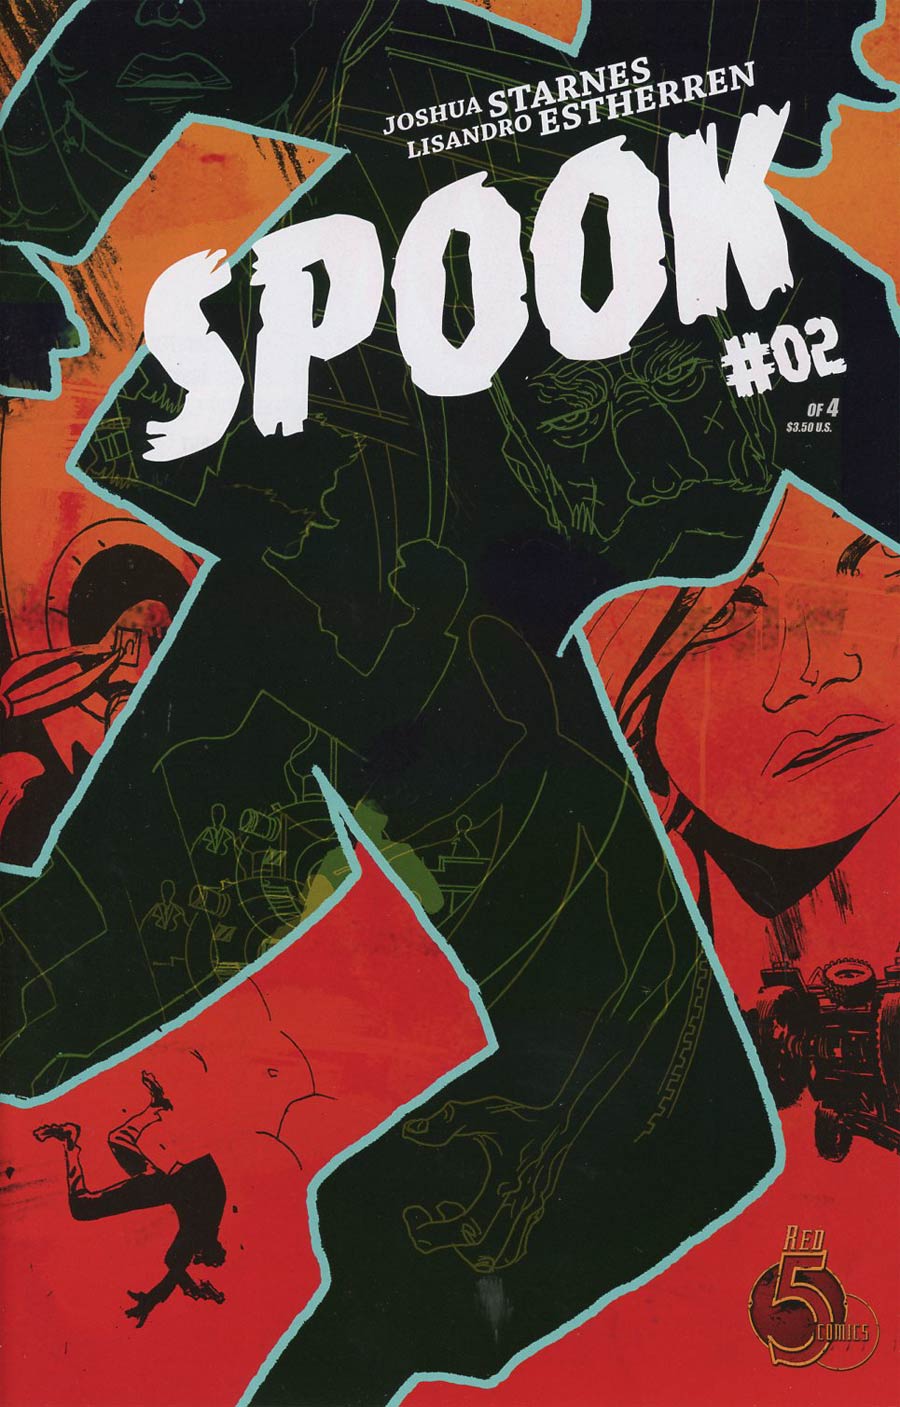 Spook (Red 5 Comics) #2